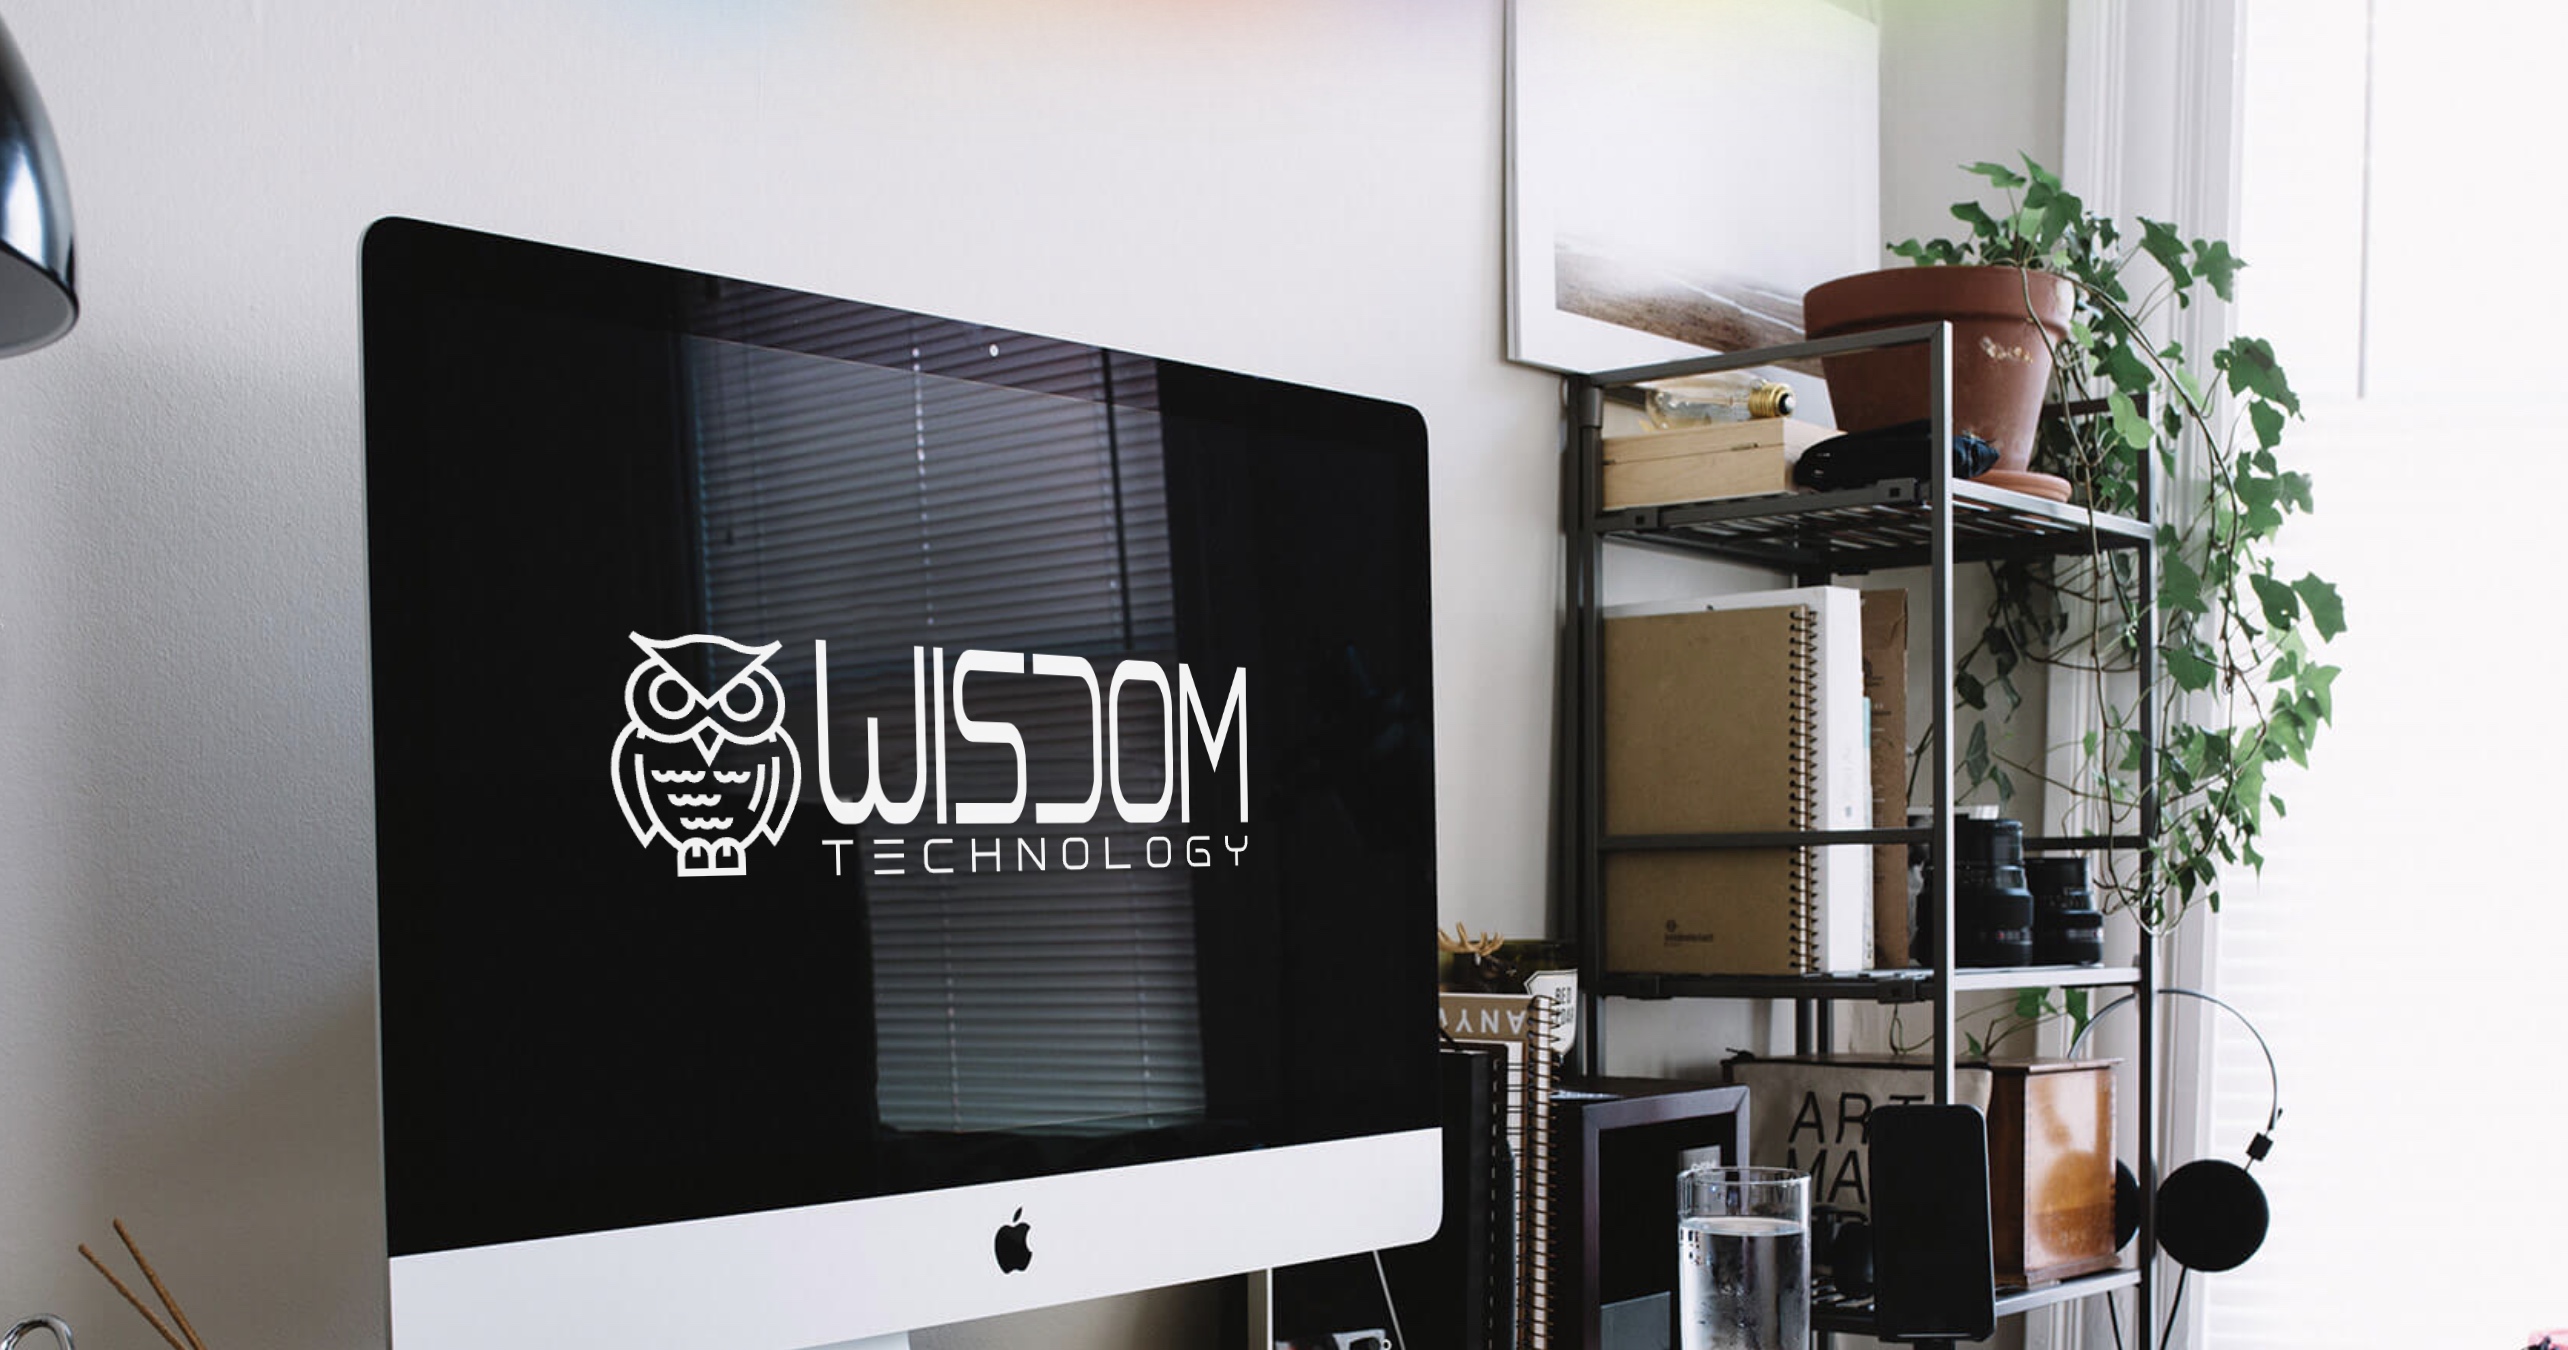 WISDOM Technology Company